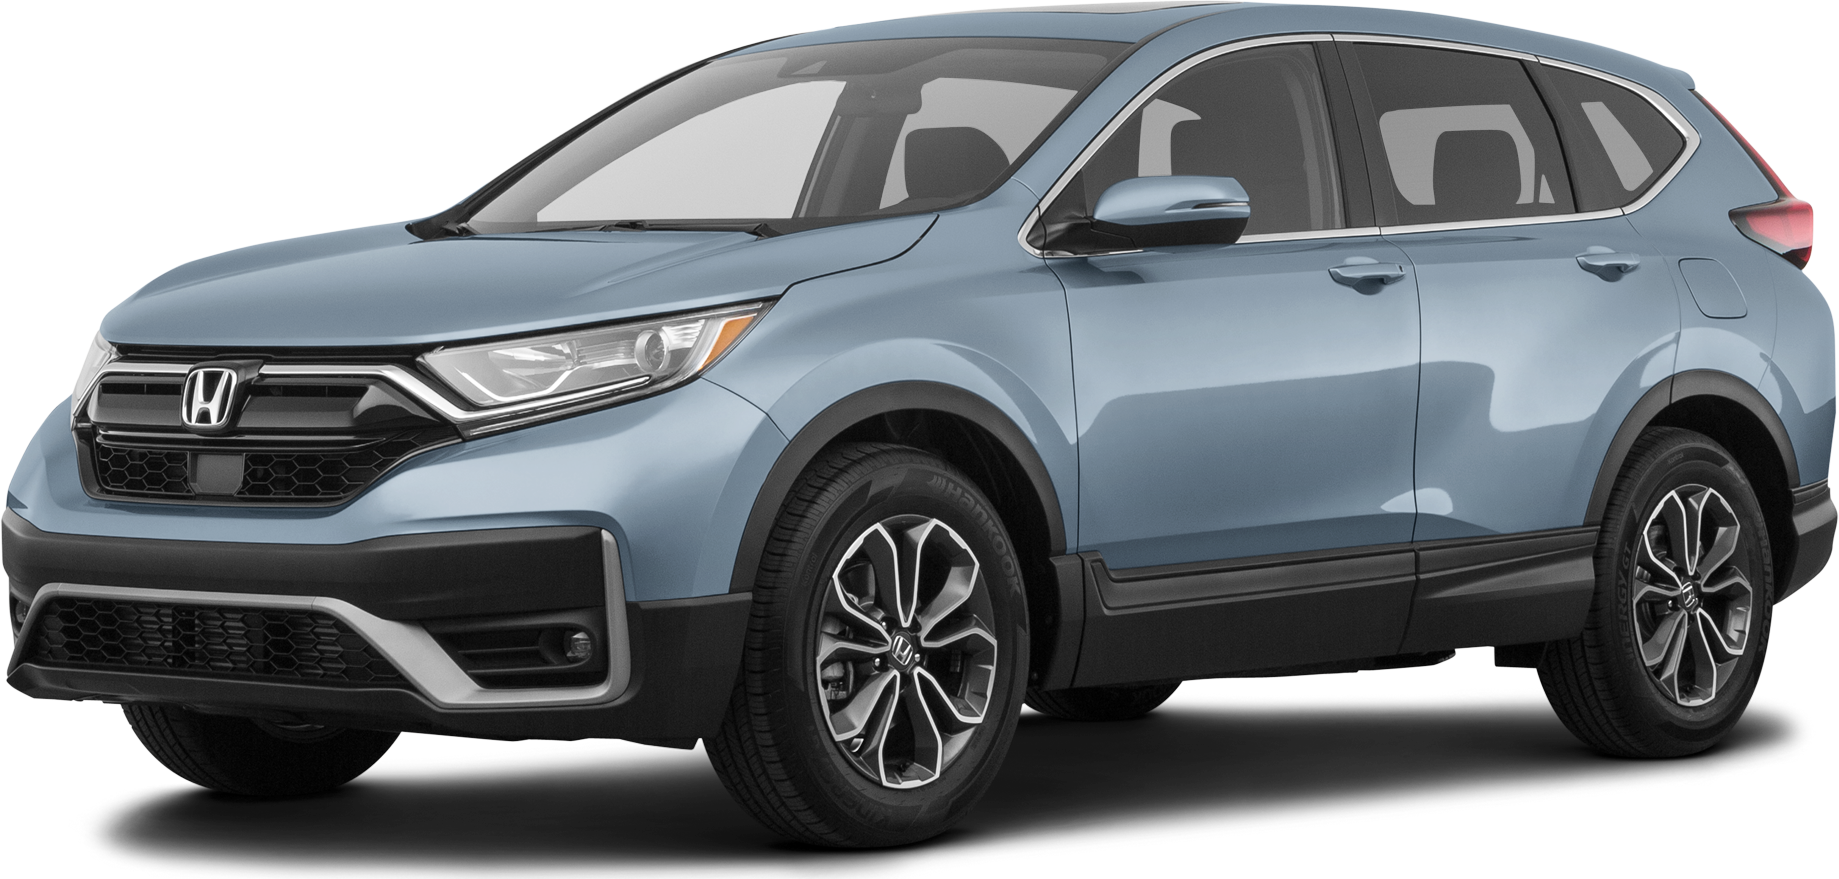 2020 Honda Cr V Price Value Ratings And Reviews Kelley Blue Book